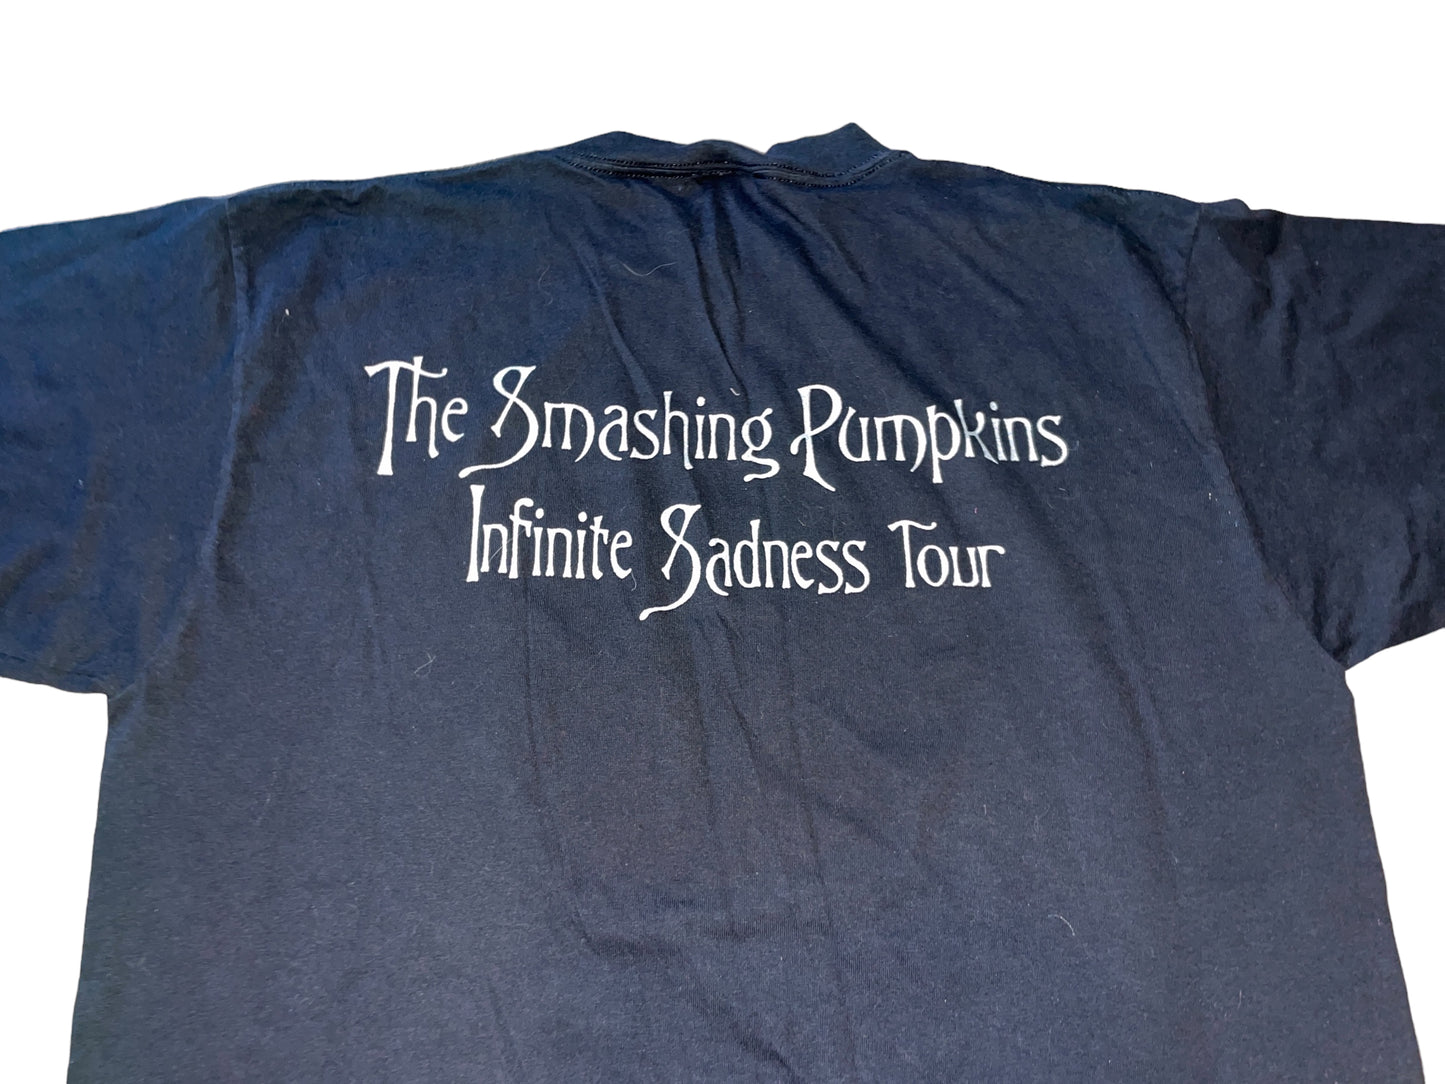 Vintage 1996 The Smashing Pumpkins T-Shirt